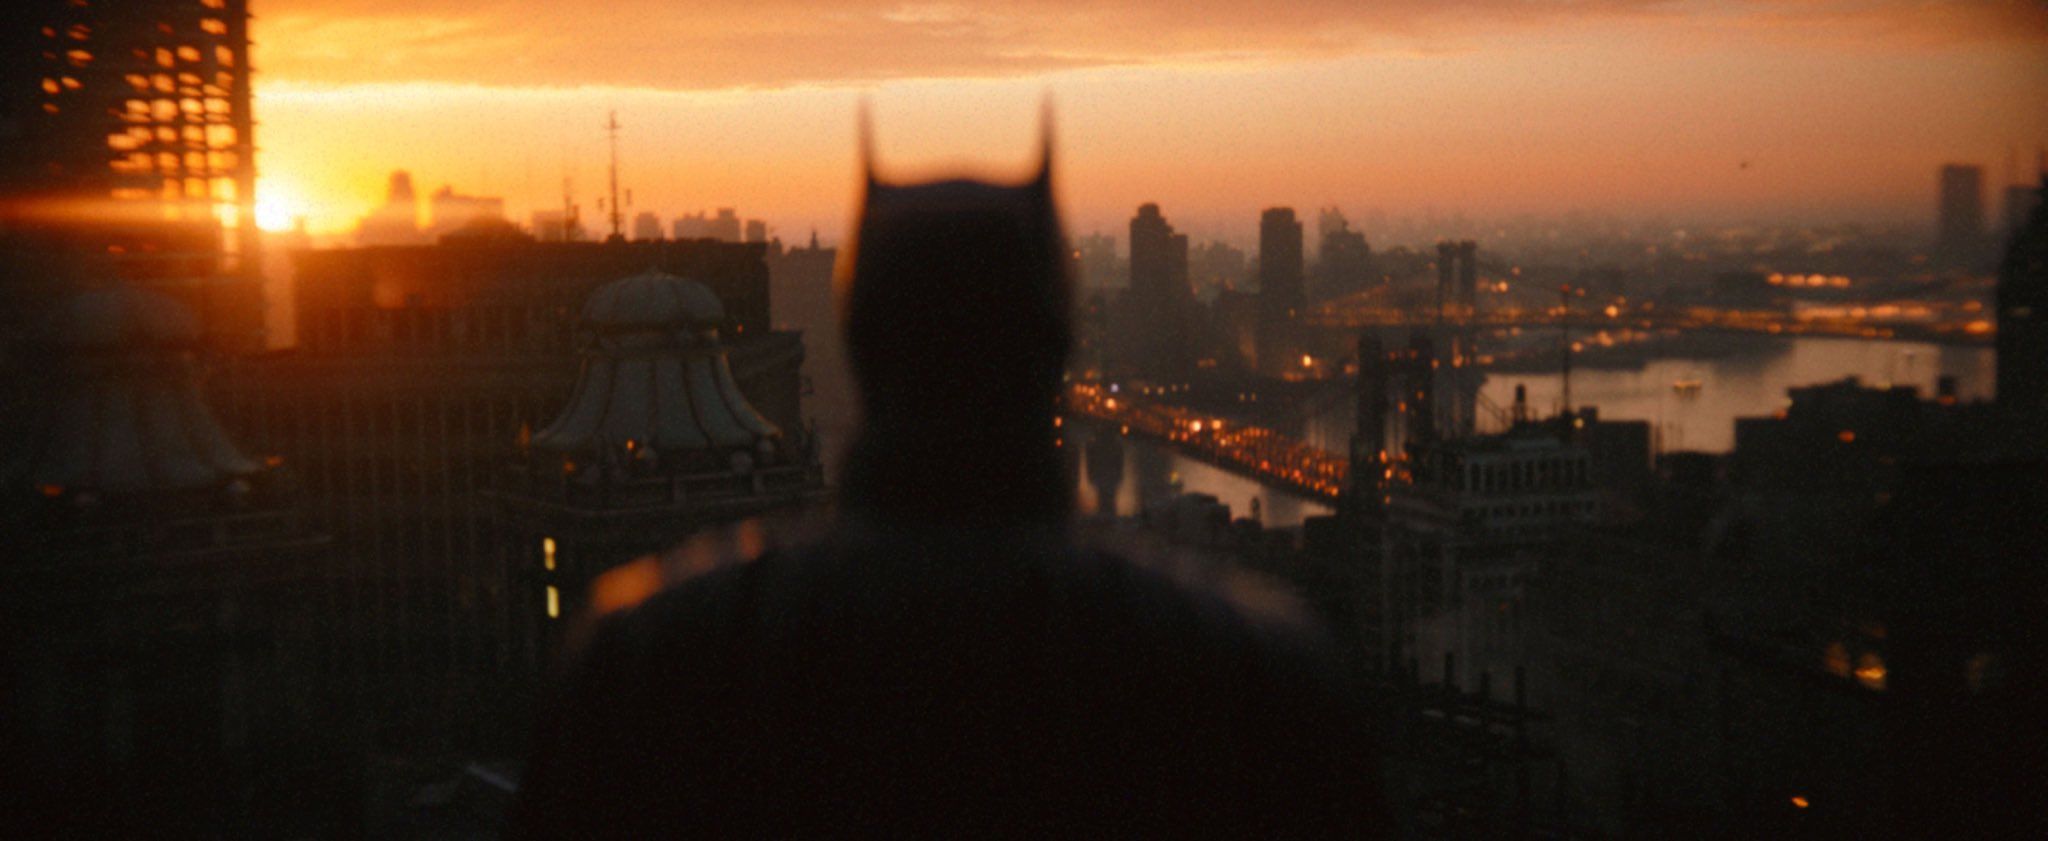 Matt Reeves shares The Batman trailer shot ahead of DC FanDome